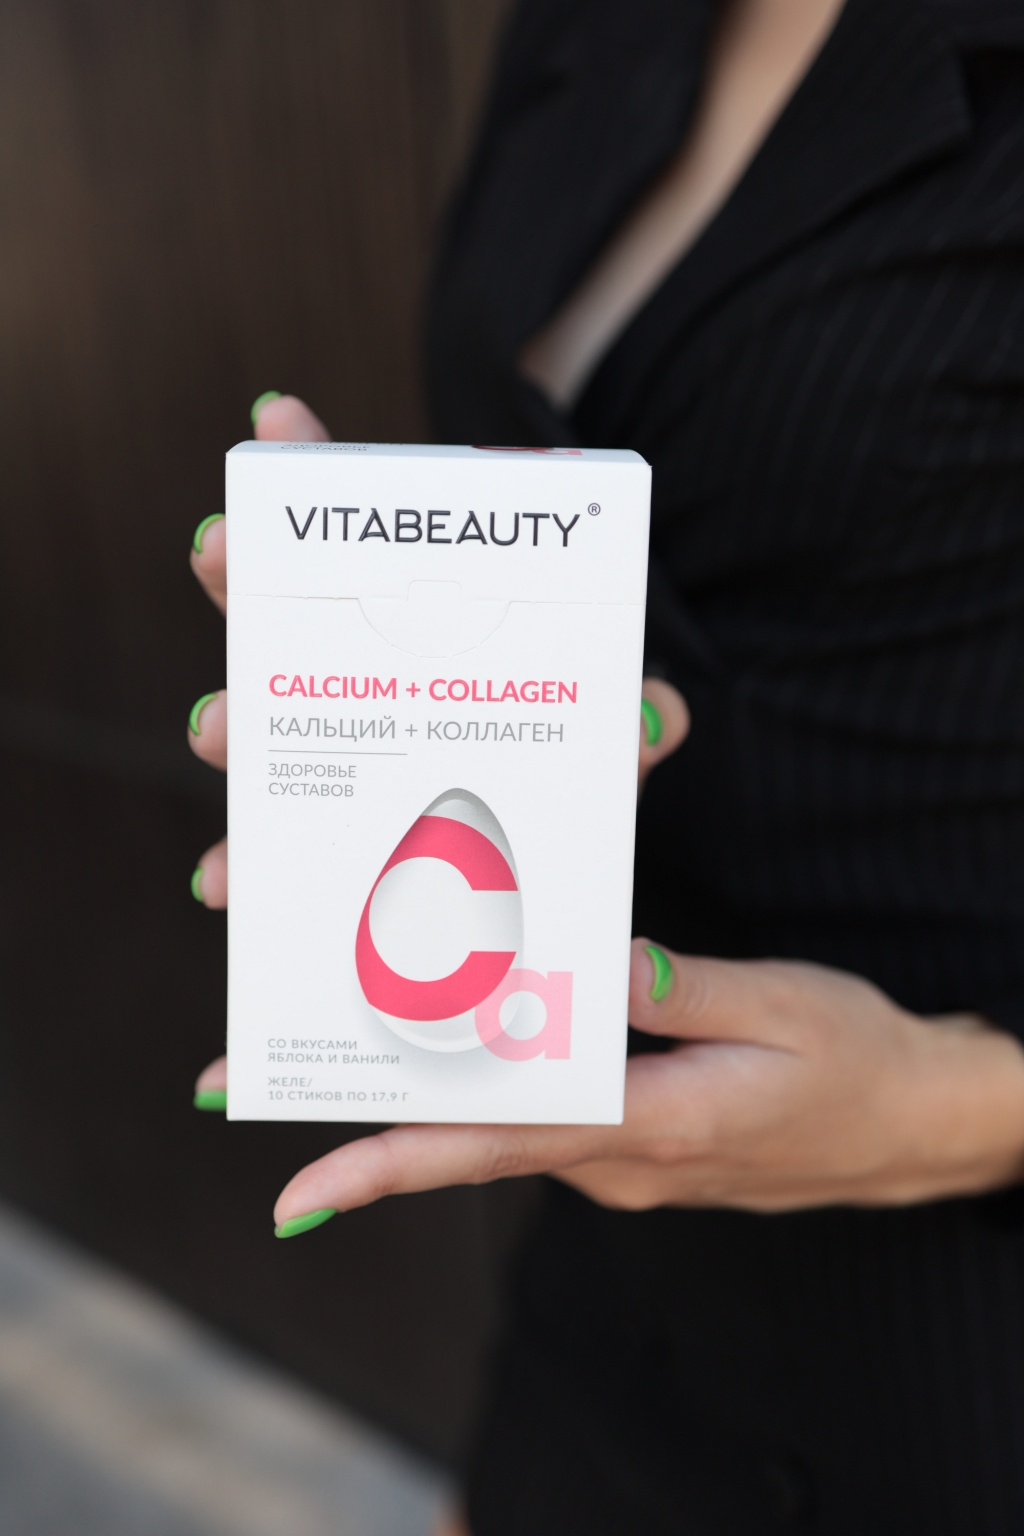 Vitabeauty Hair, Skin & Nails - Качественный комплекс и хороший состав